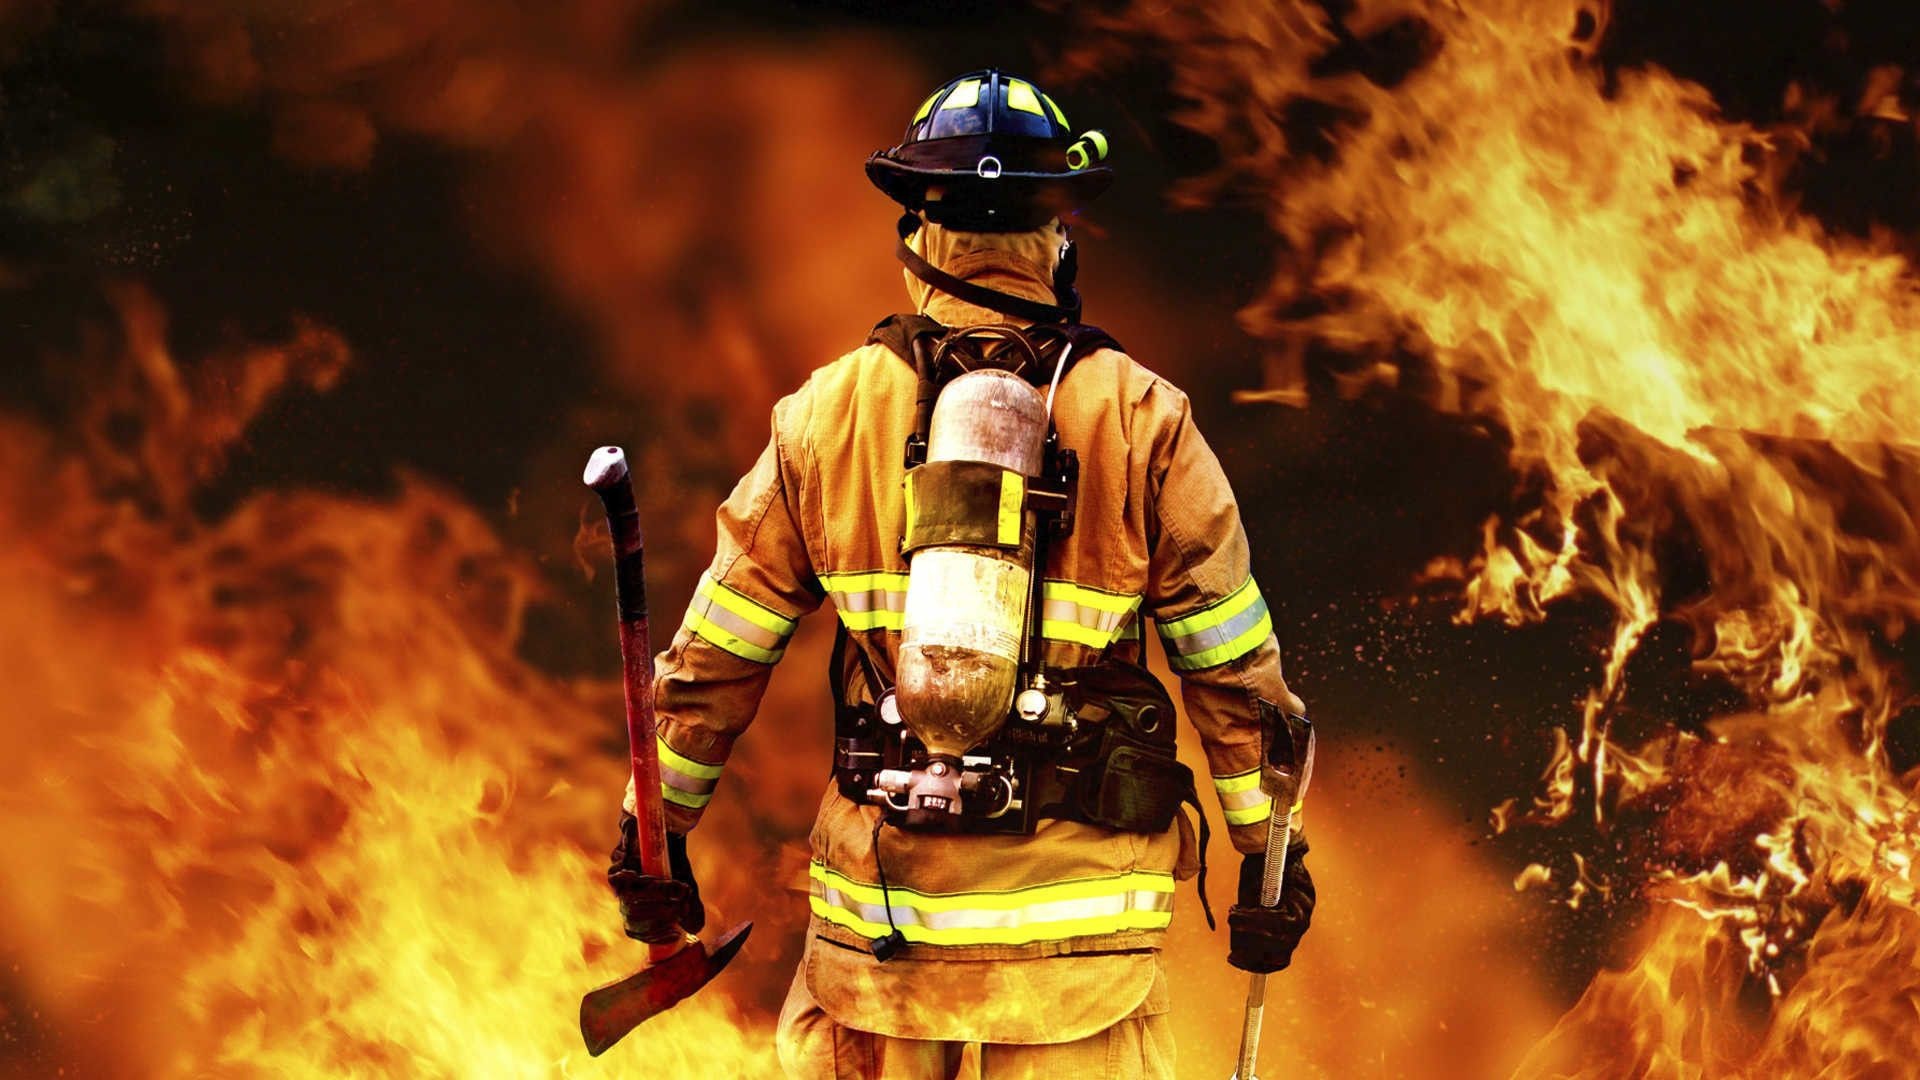 Fireman: Firefighting apparatus, Hazard, Rescuer. 1920x1080 Full HD Wallpaper.